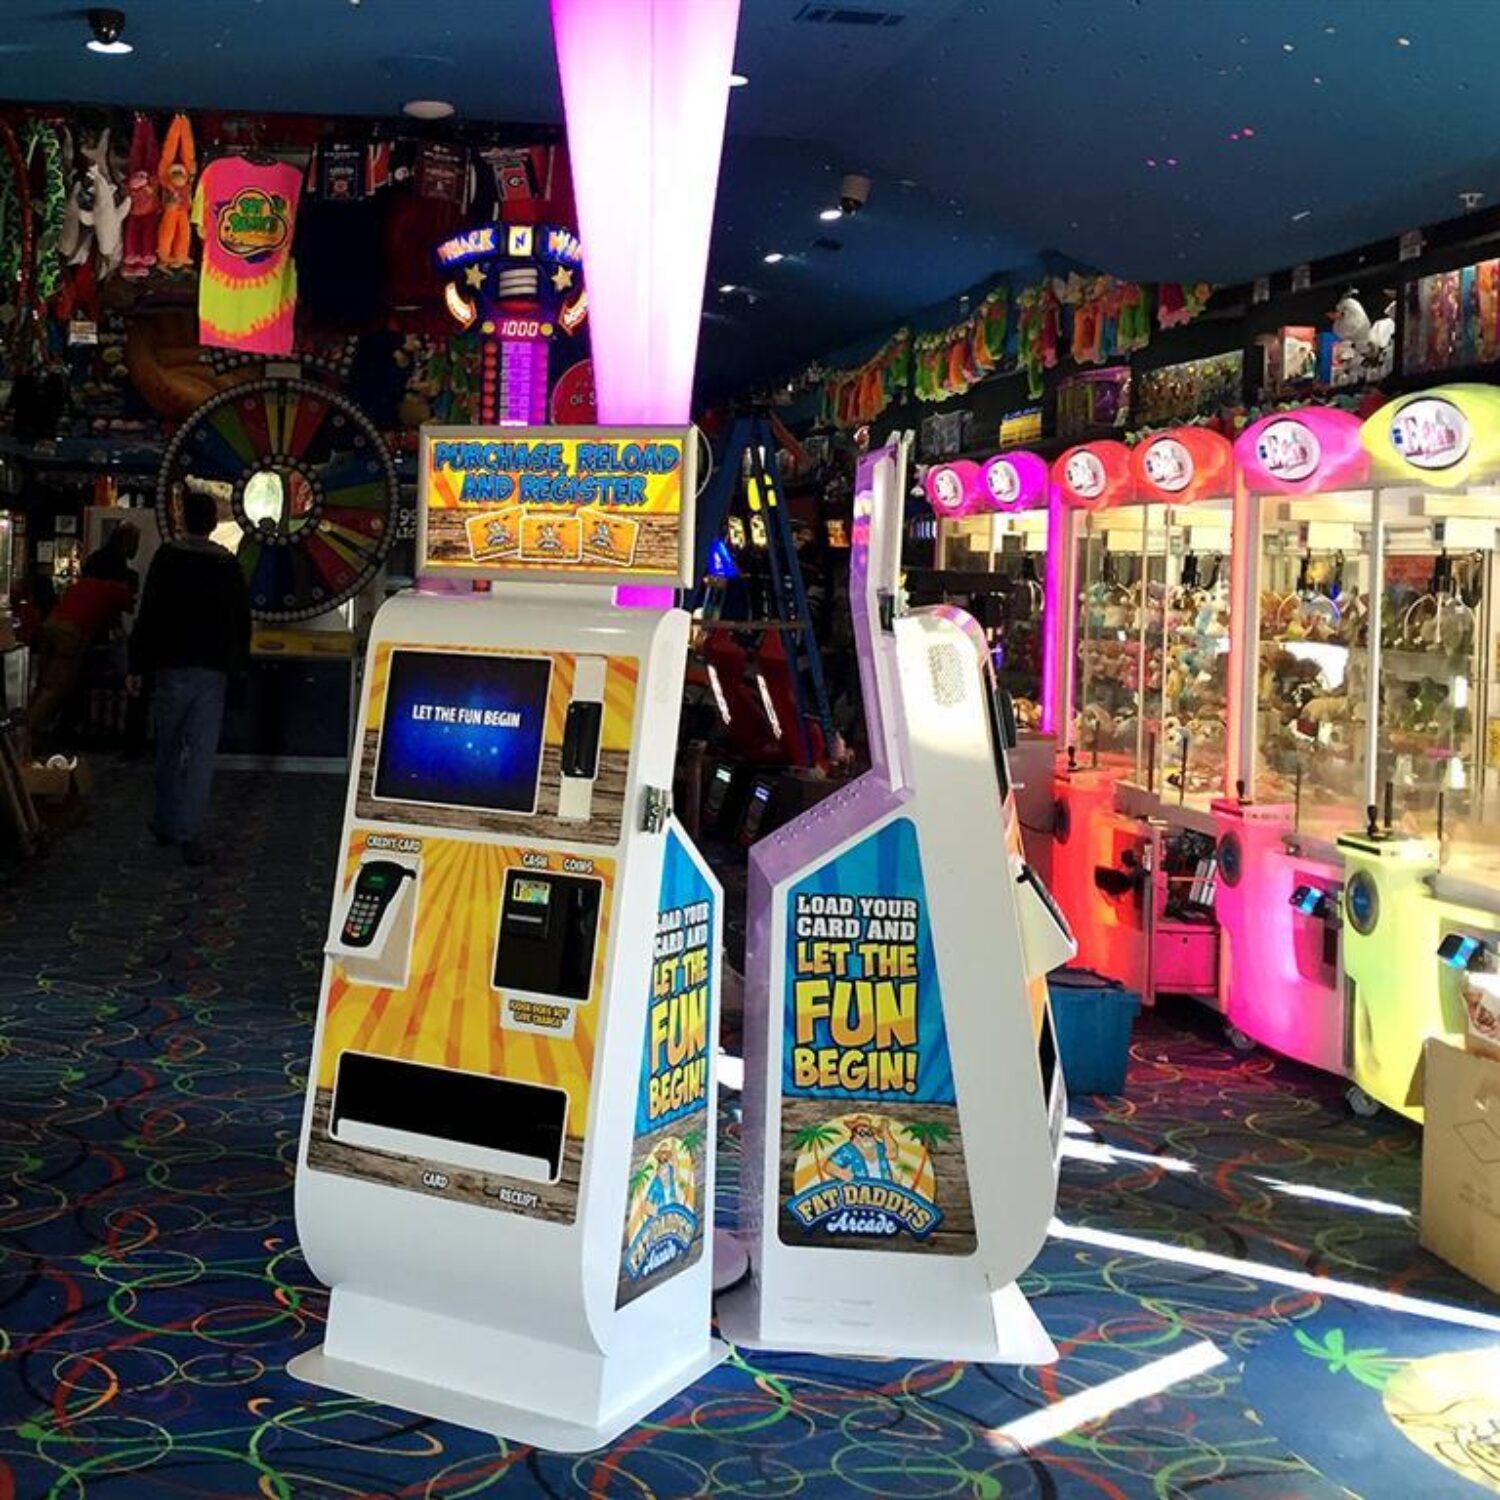 Gaming kiosk in an arcade